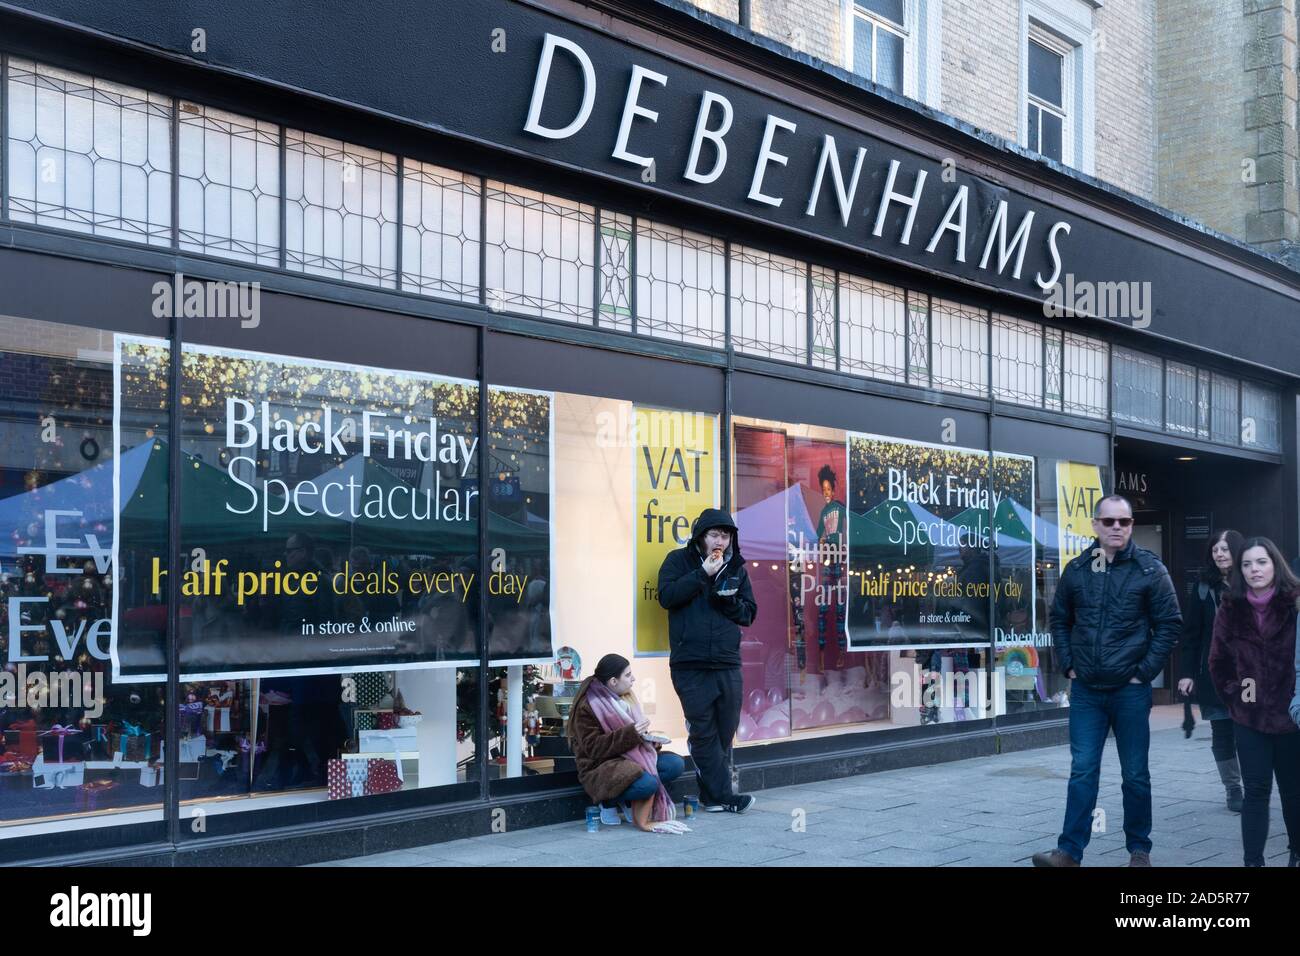 Black Friday event at Debenhams high street department stall, UK Stock Photo